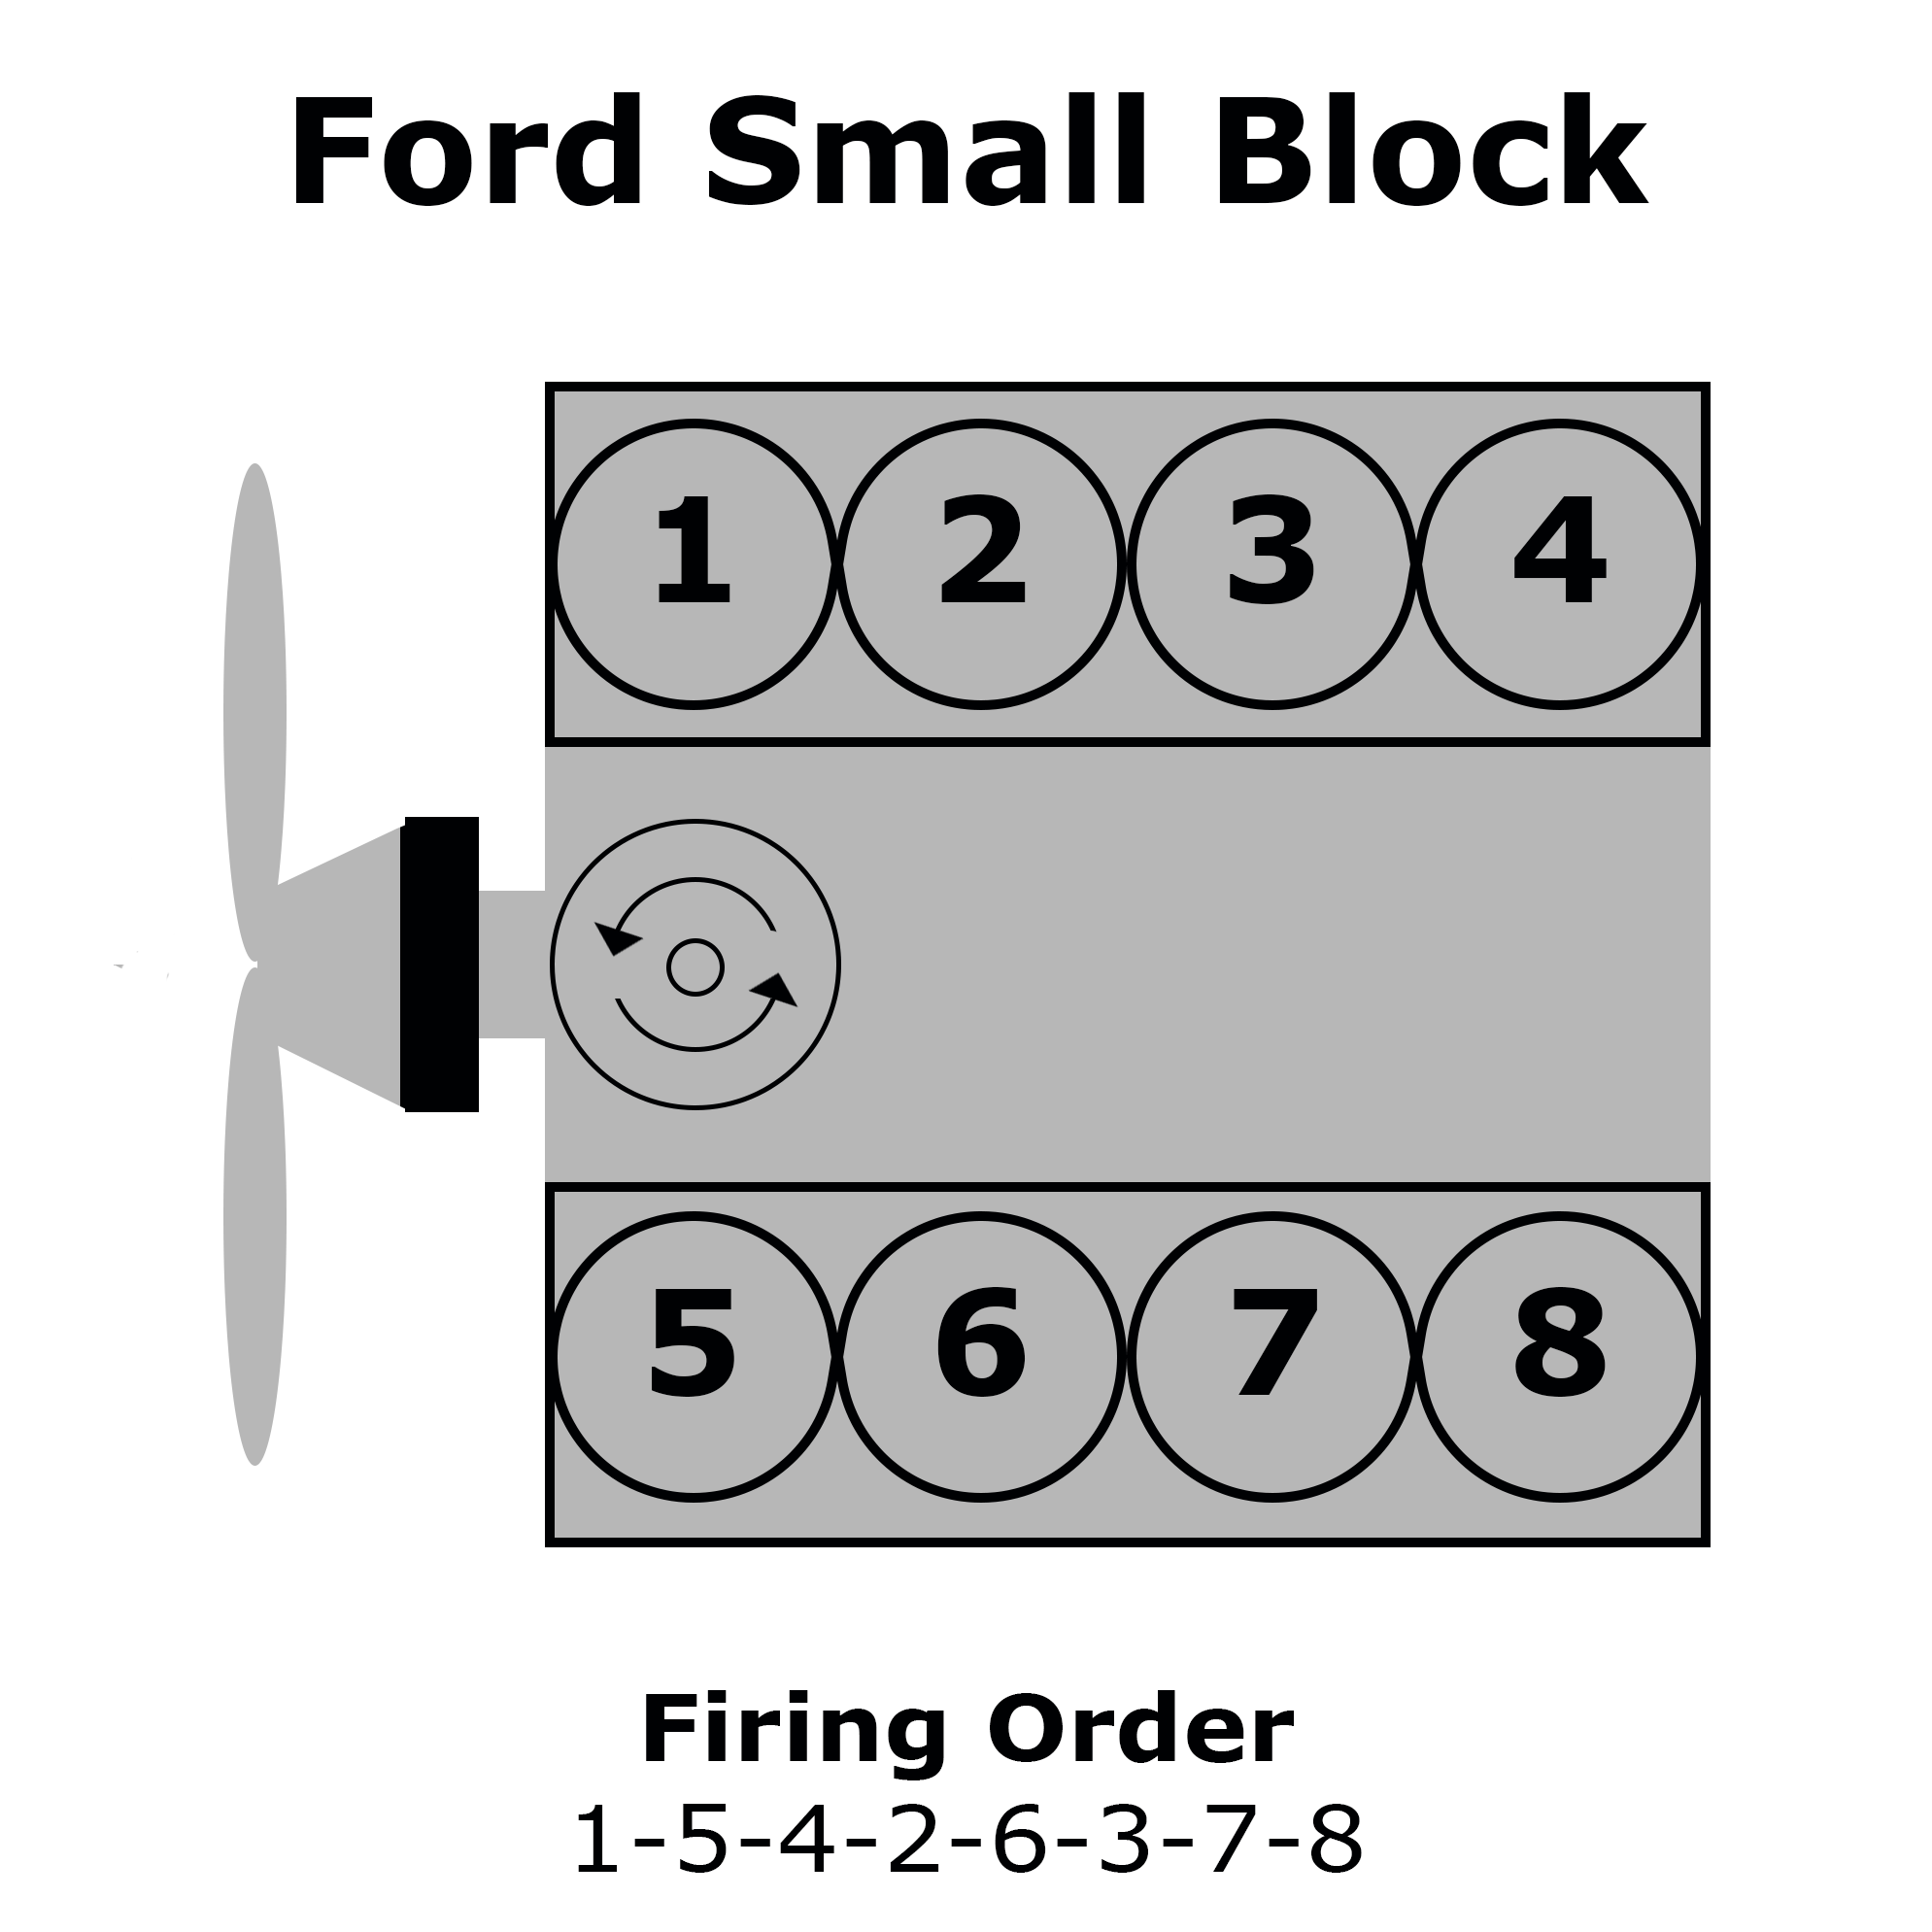 Ford Firing Order Shirt